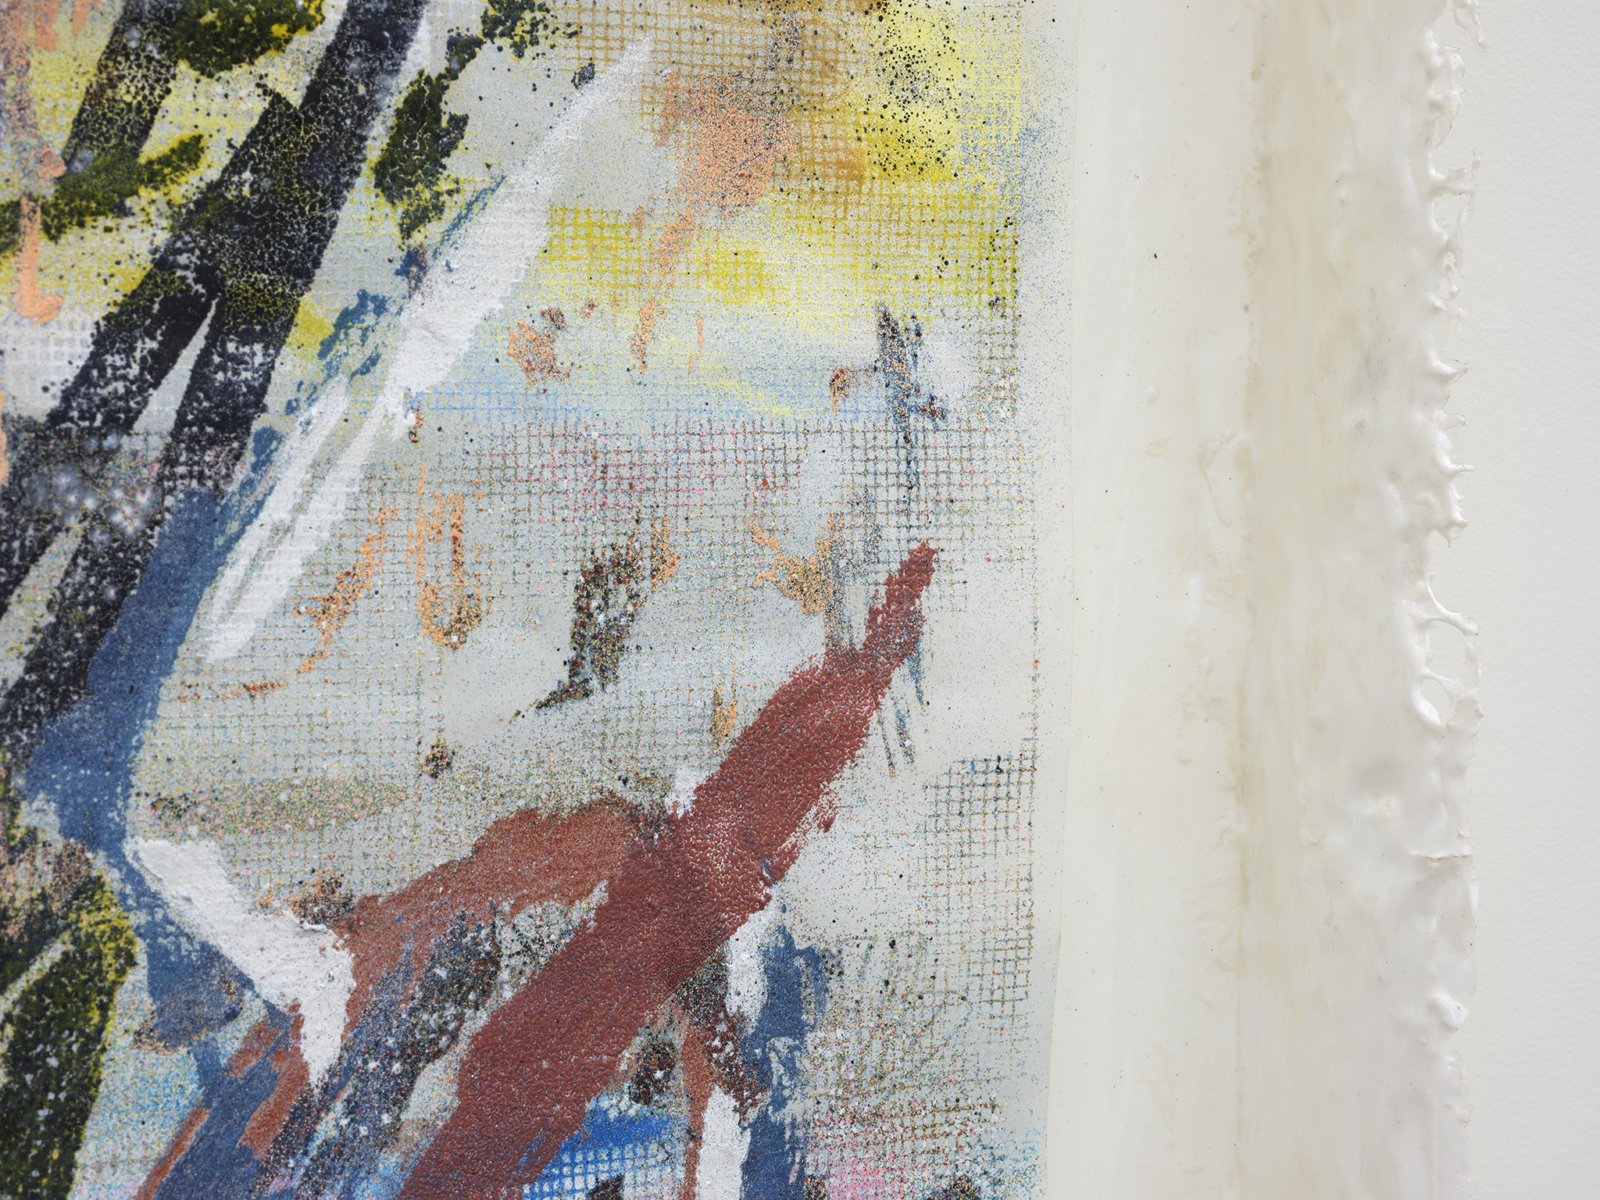 Rebecca Brewer, Live Resin: Flood Notes (detail), 2019, urethane resin, aluminum mesh, pigment, plexiglas, embossing powder on vellum, 41 x 29 in. (104 x 74 cm)